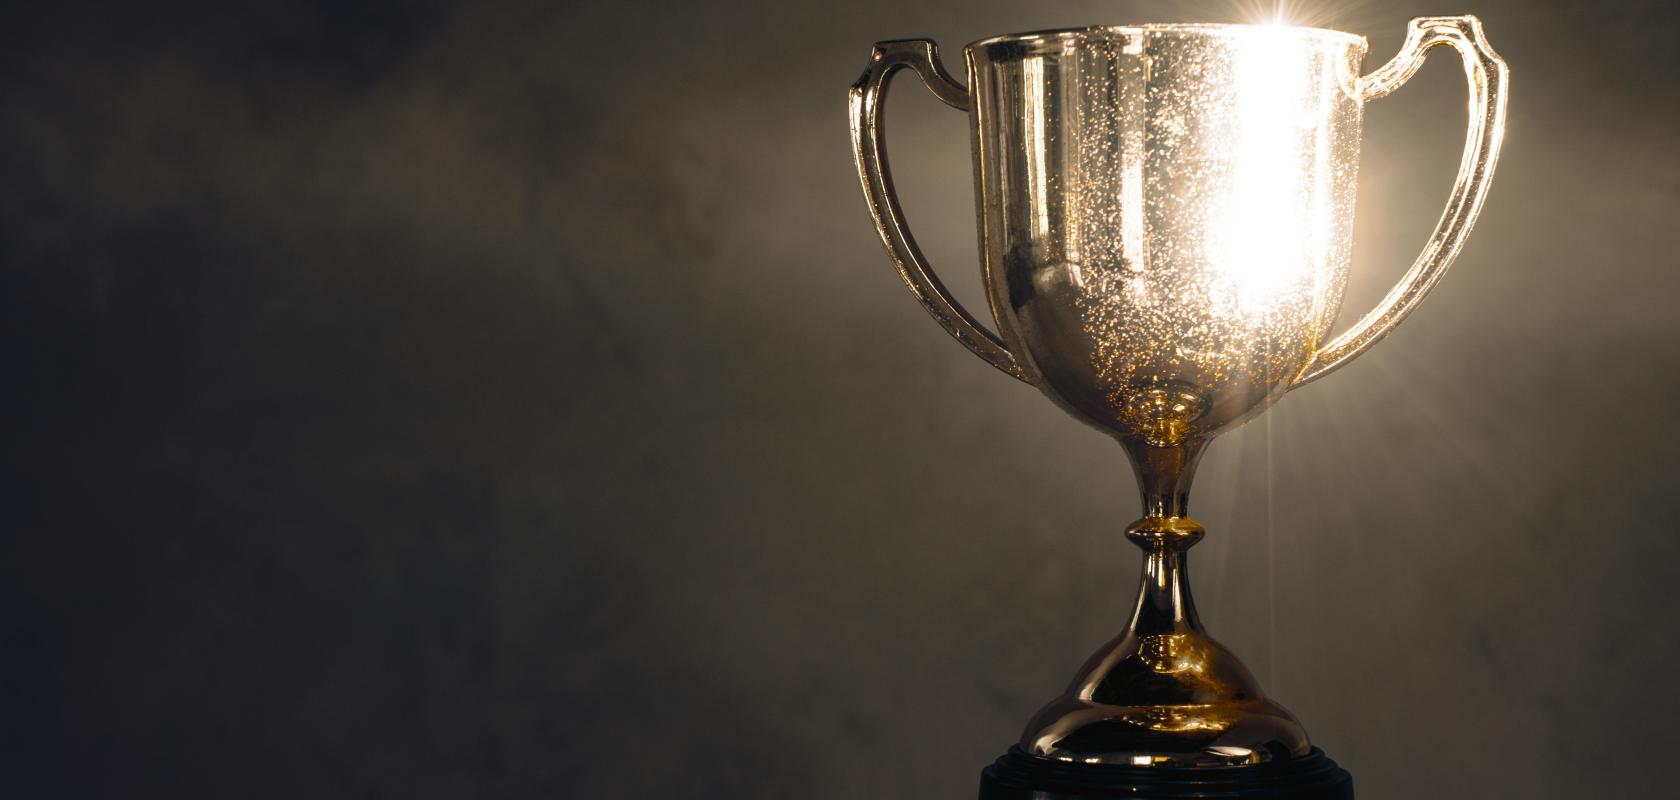 FTTH Innovation Awards shortlist announced